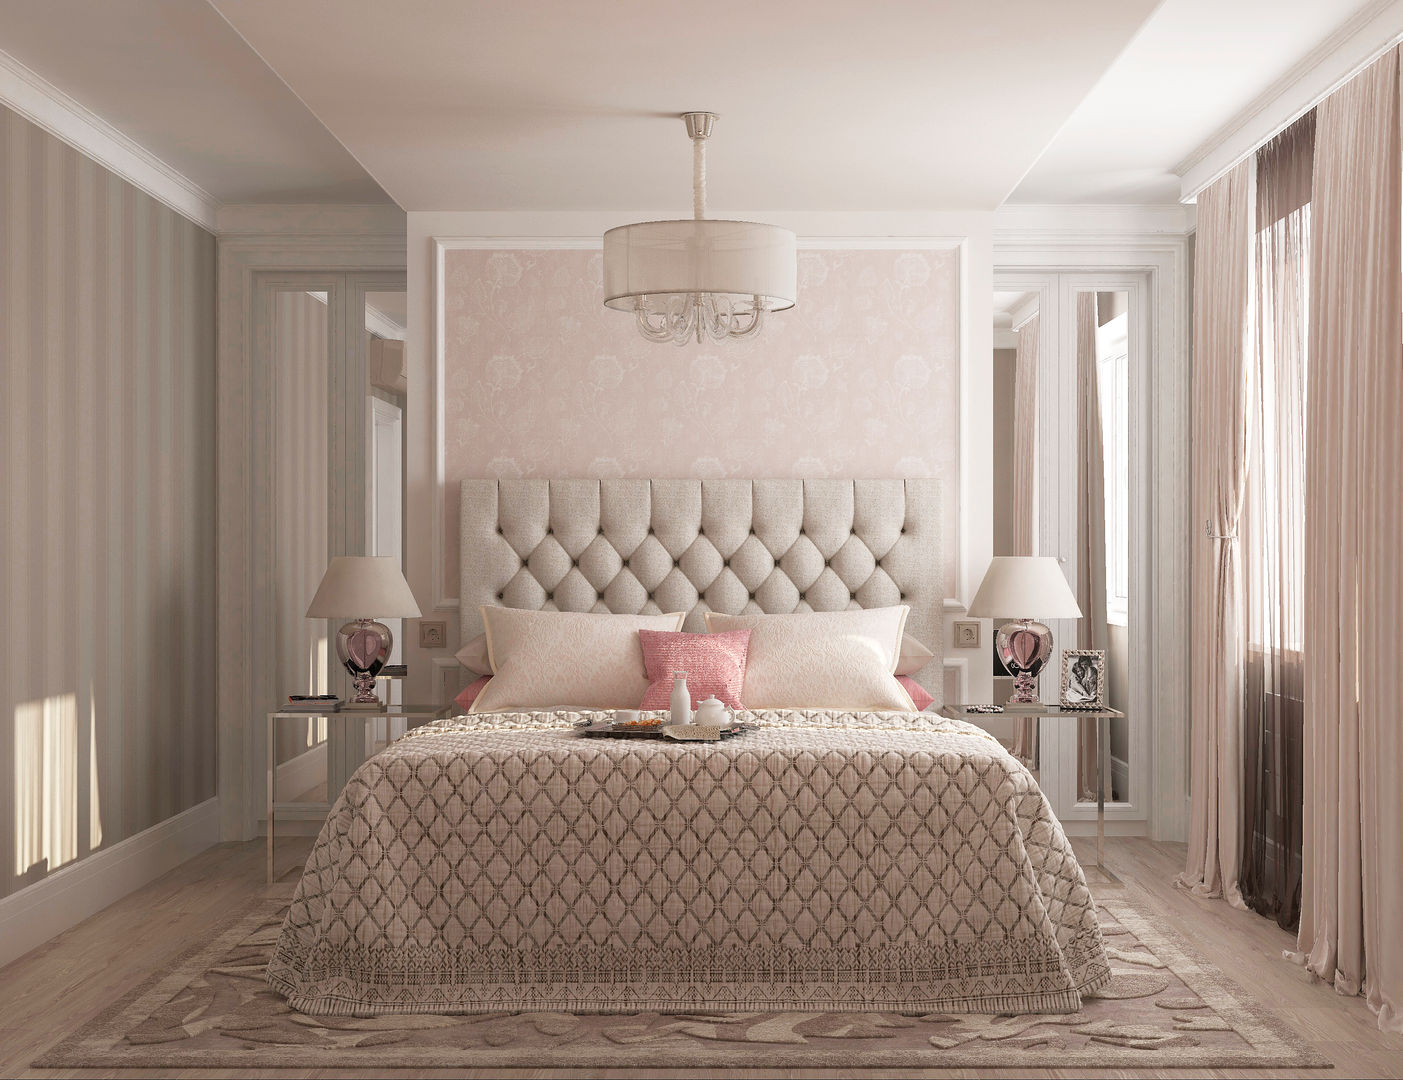 Спальня гостевая "Glamour", Студия дизайна Дарьи Одарюк Студия дизайна Дарьи Одарюк Chambre classique